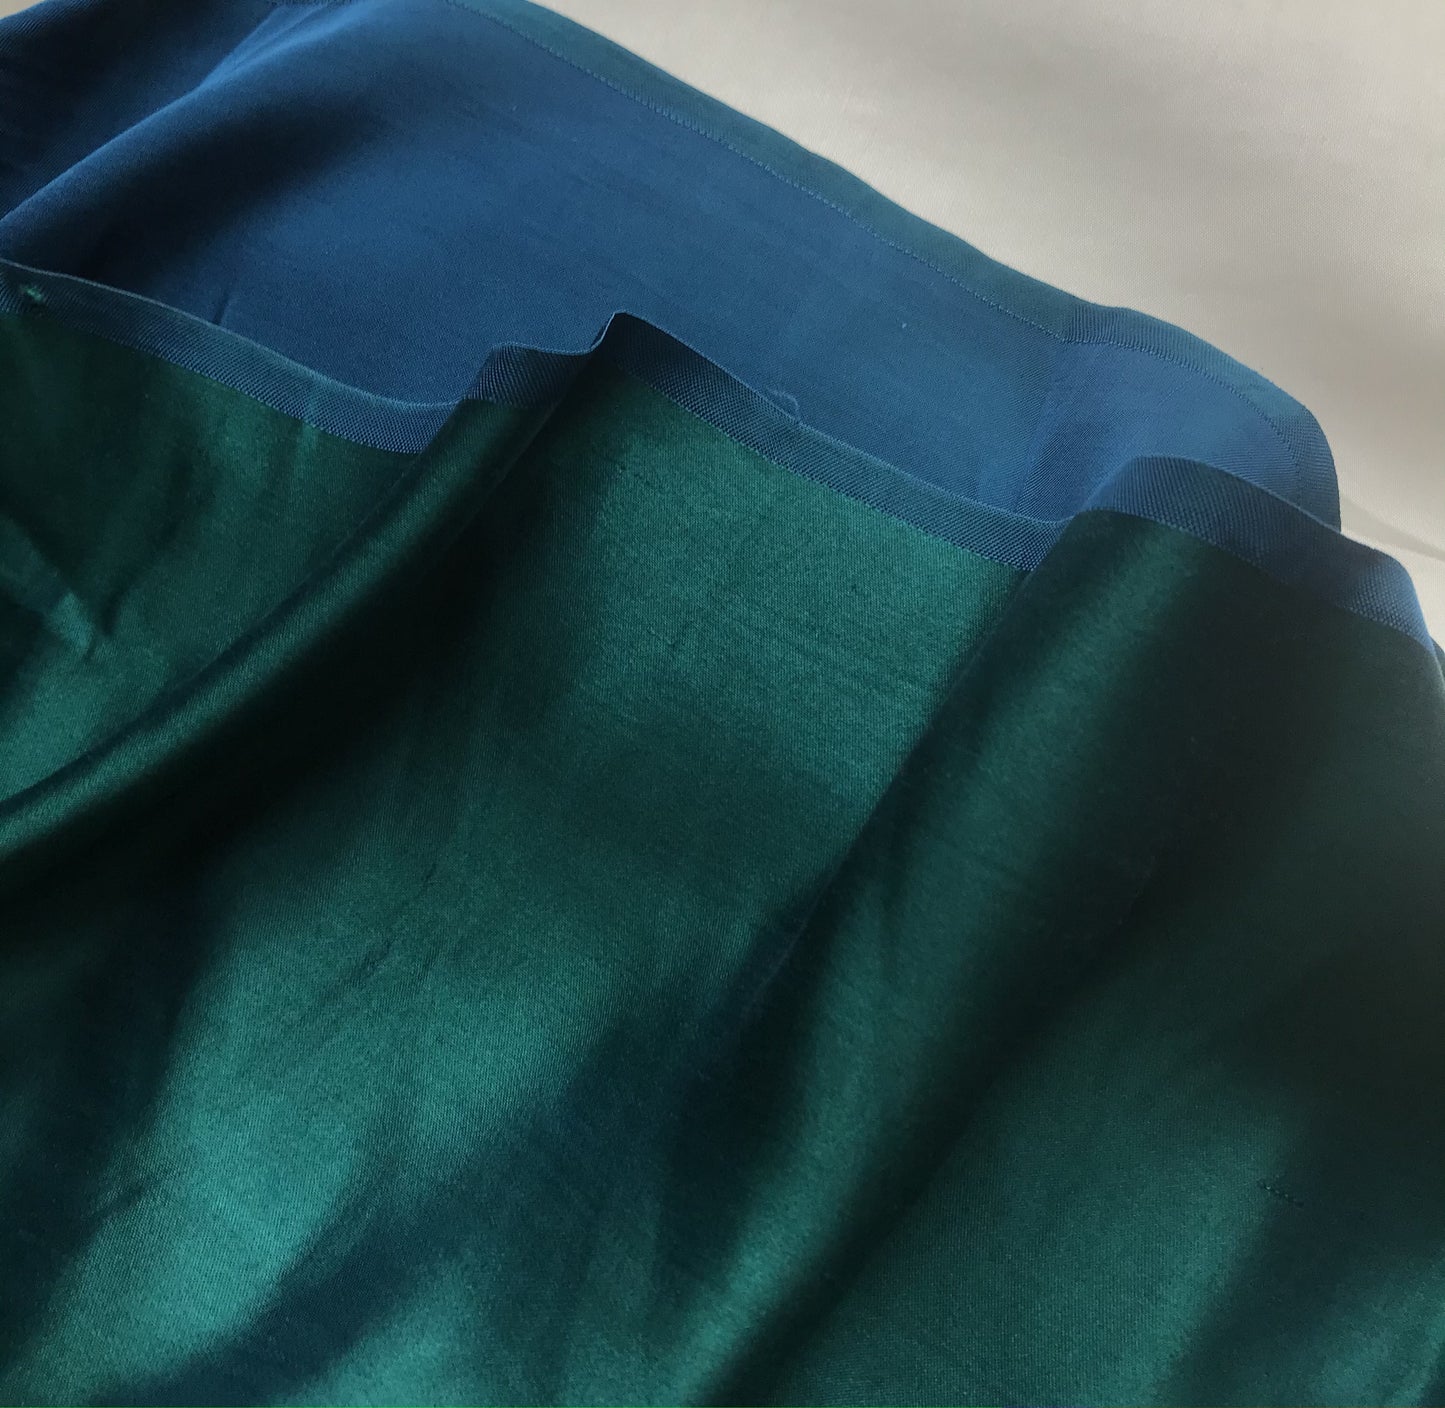 Peacock silk - PURE MULBERRY SILK fabric by the yard - Green Silk - Luxury silk fabric - Natural silk - Handmade in VietNam - Double-sided silk